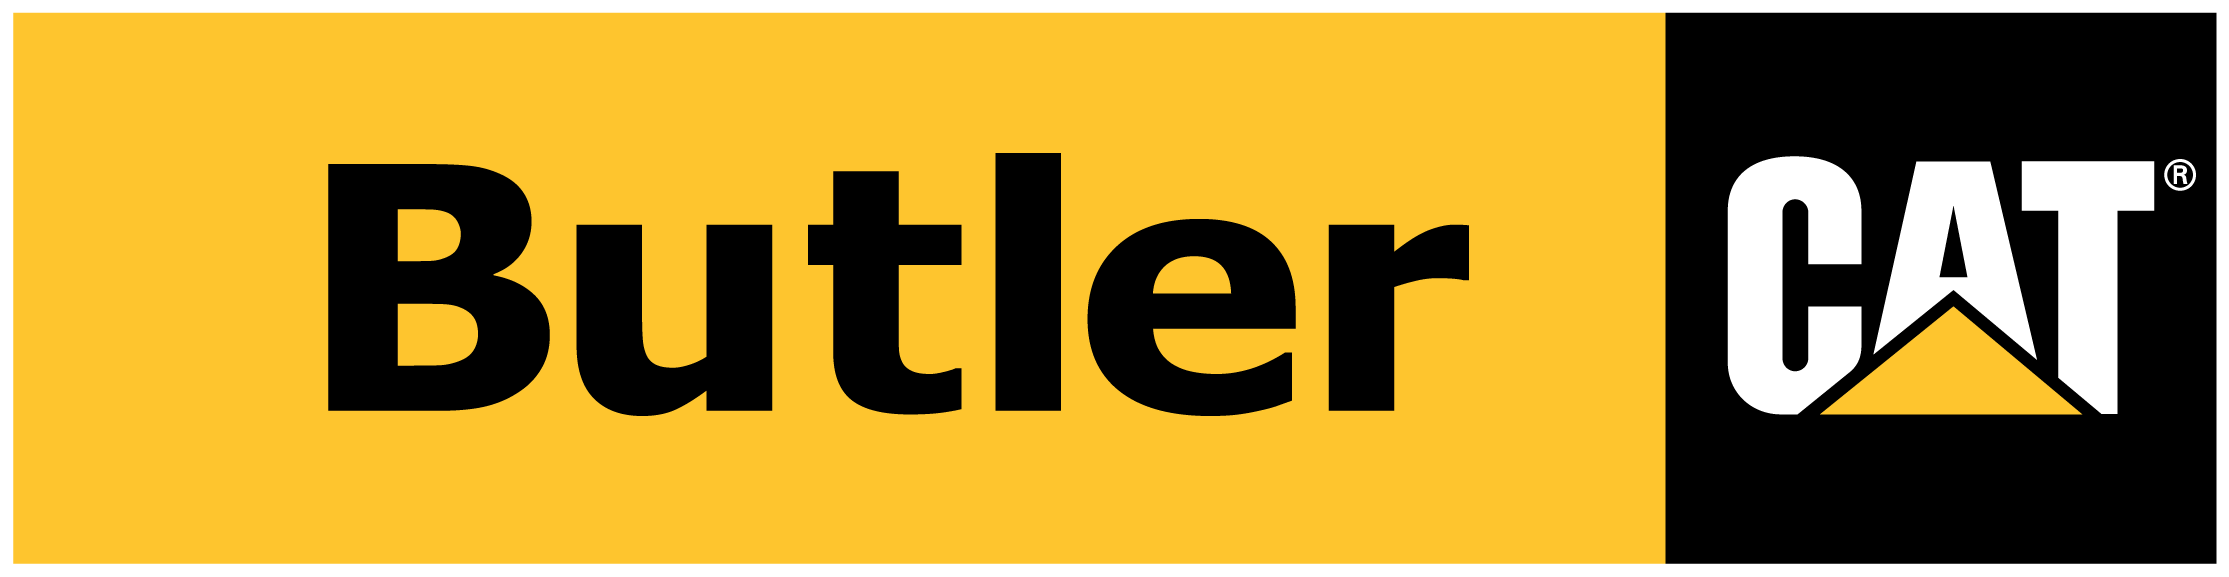 ButlerCat_COLOR_BORDER (1)